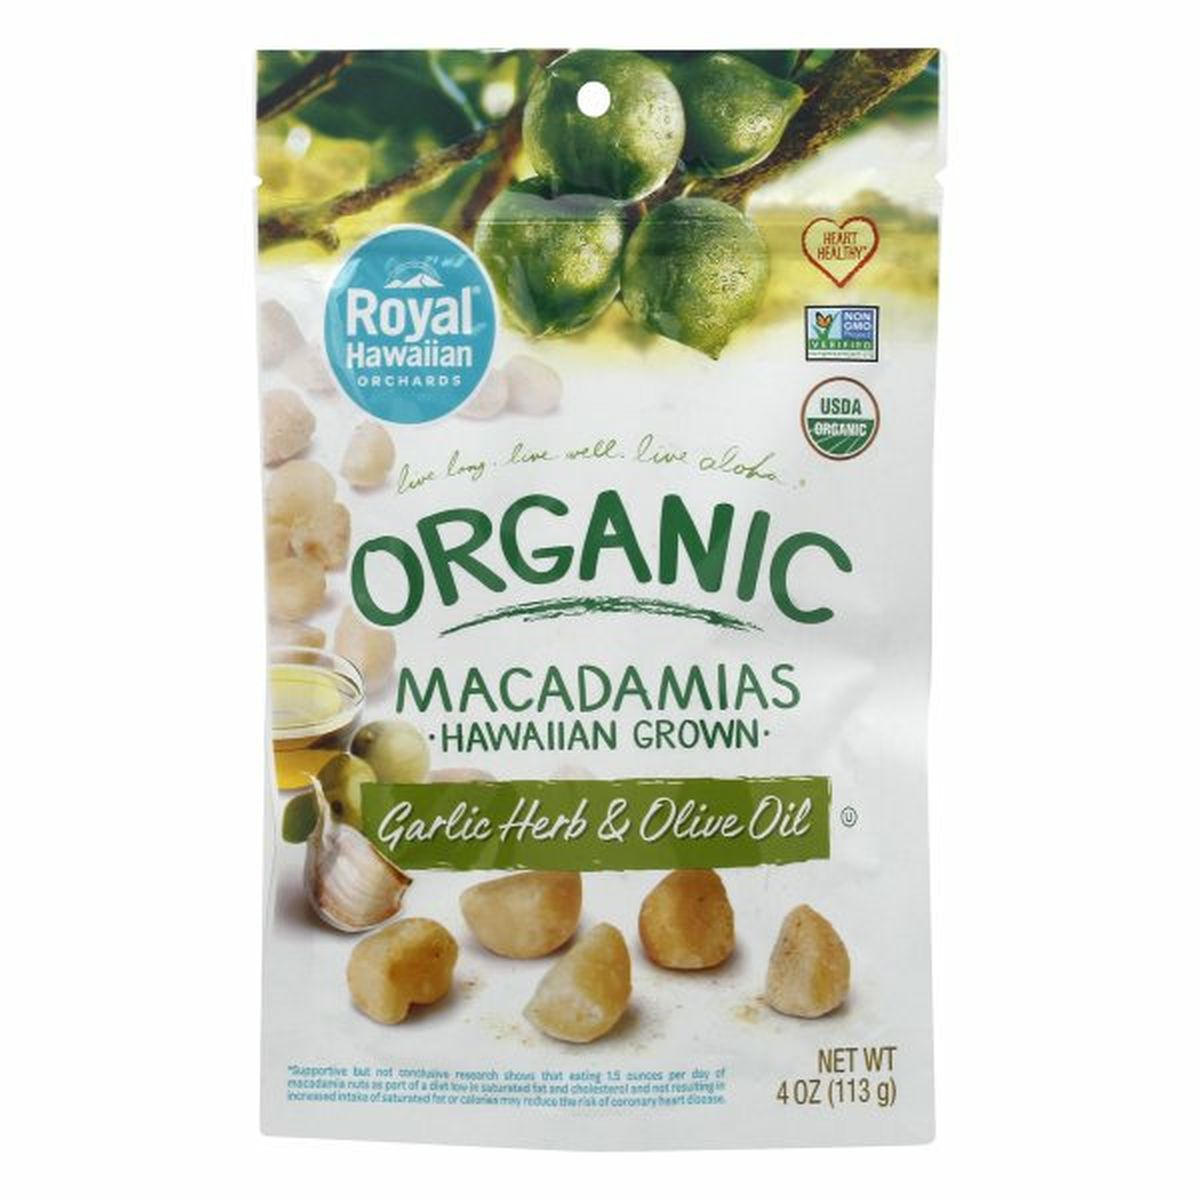 Calories in Royal Hawaiian Orchards Macadamias, Organic, Garlic Herb & Olive Oil